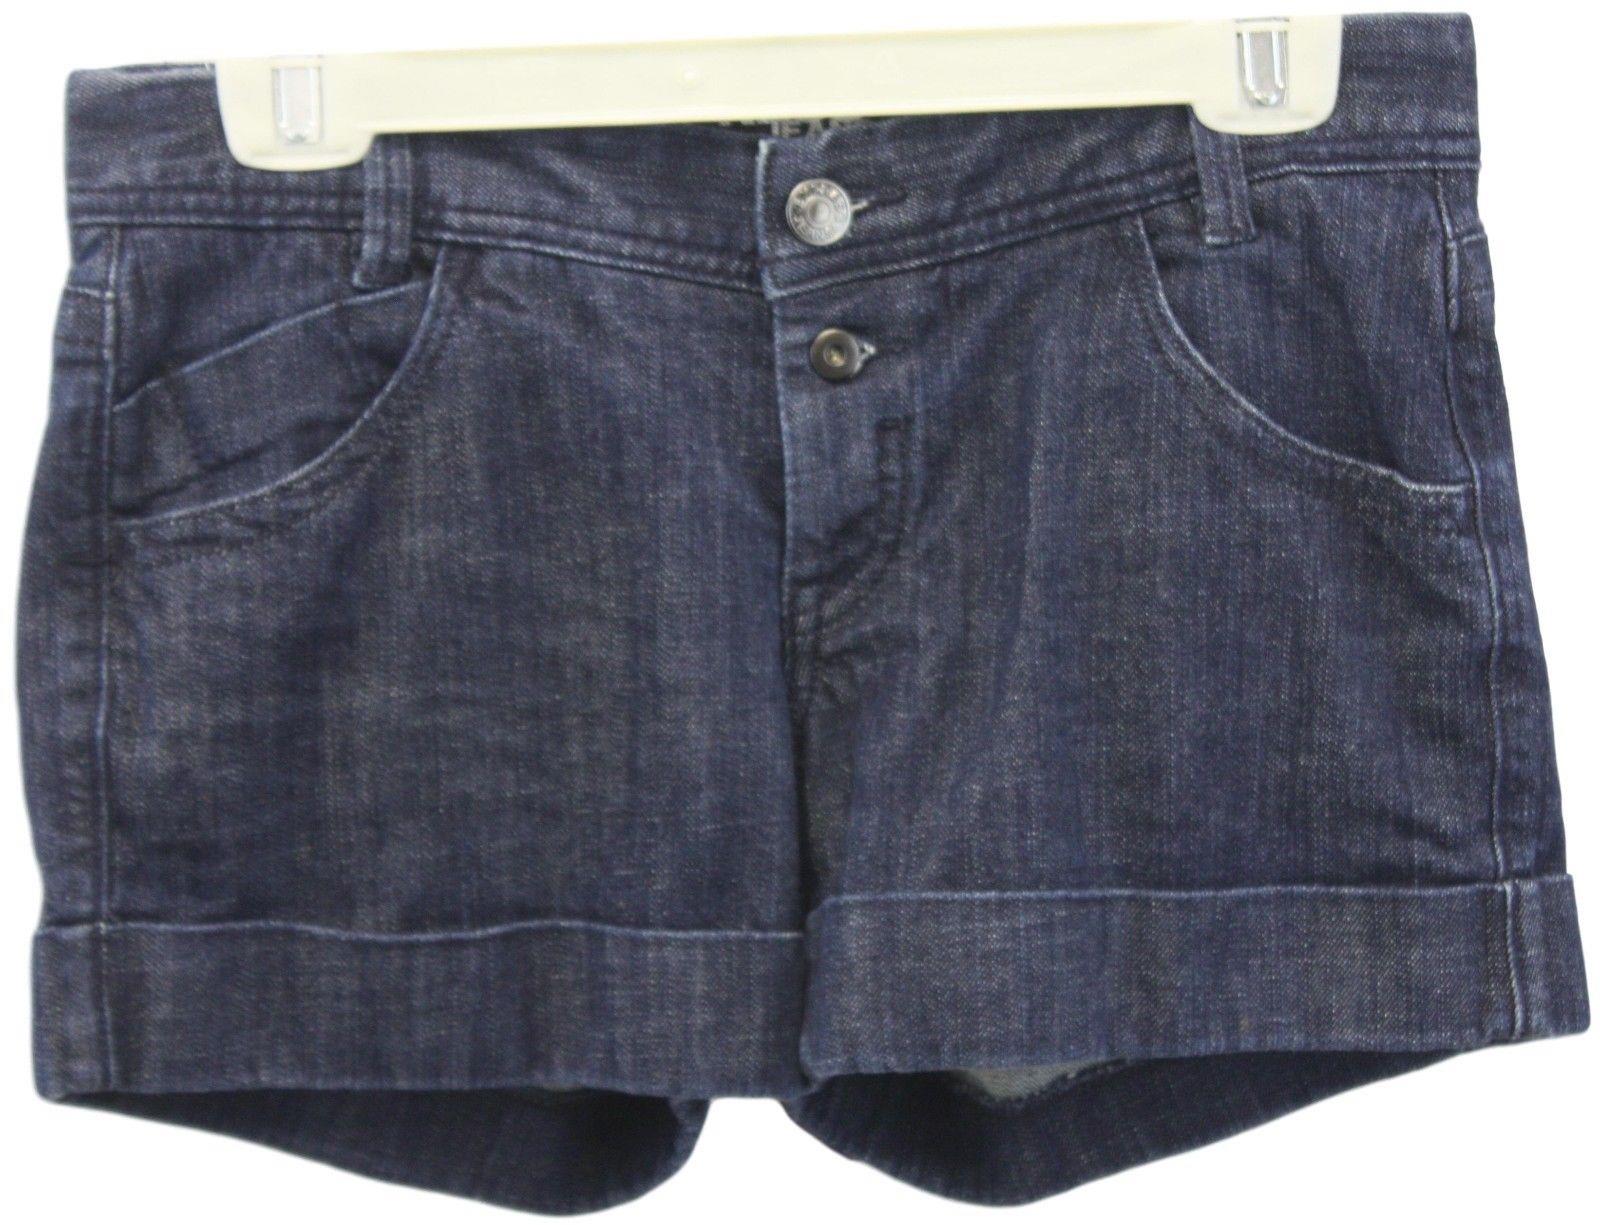 express jean shorts womens